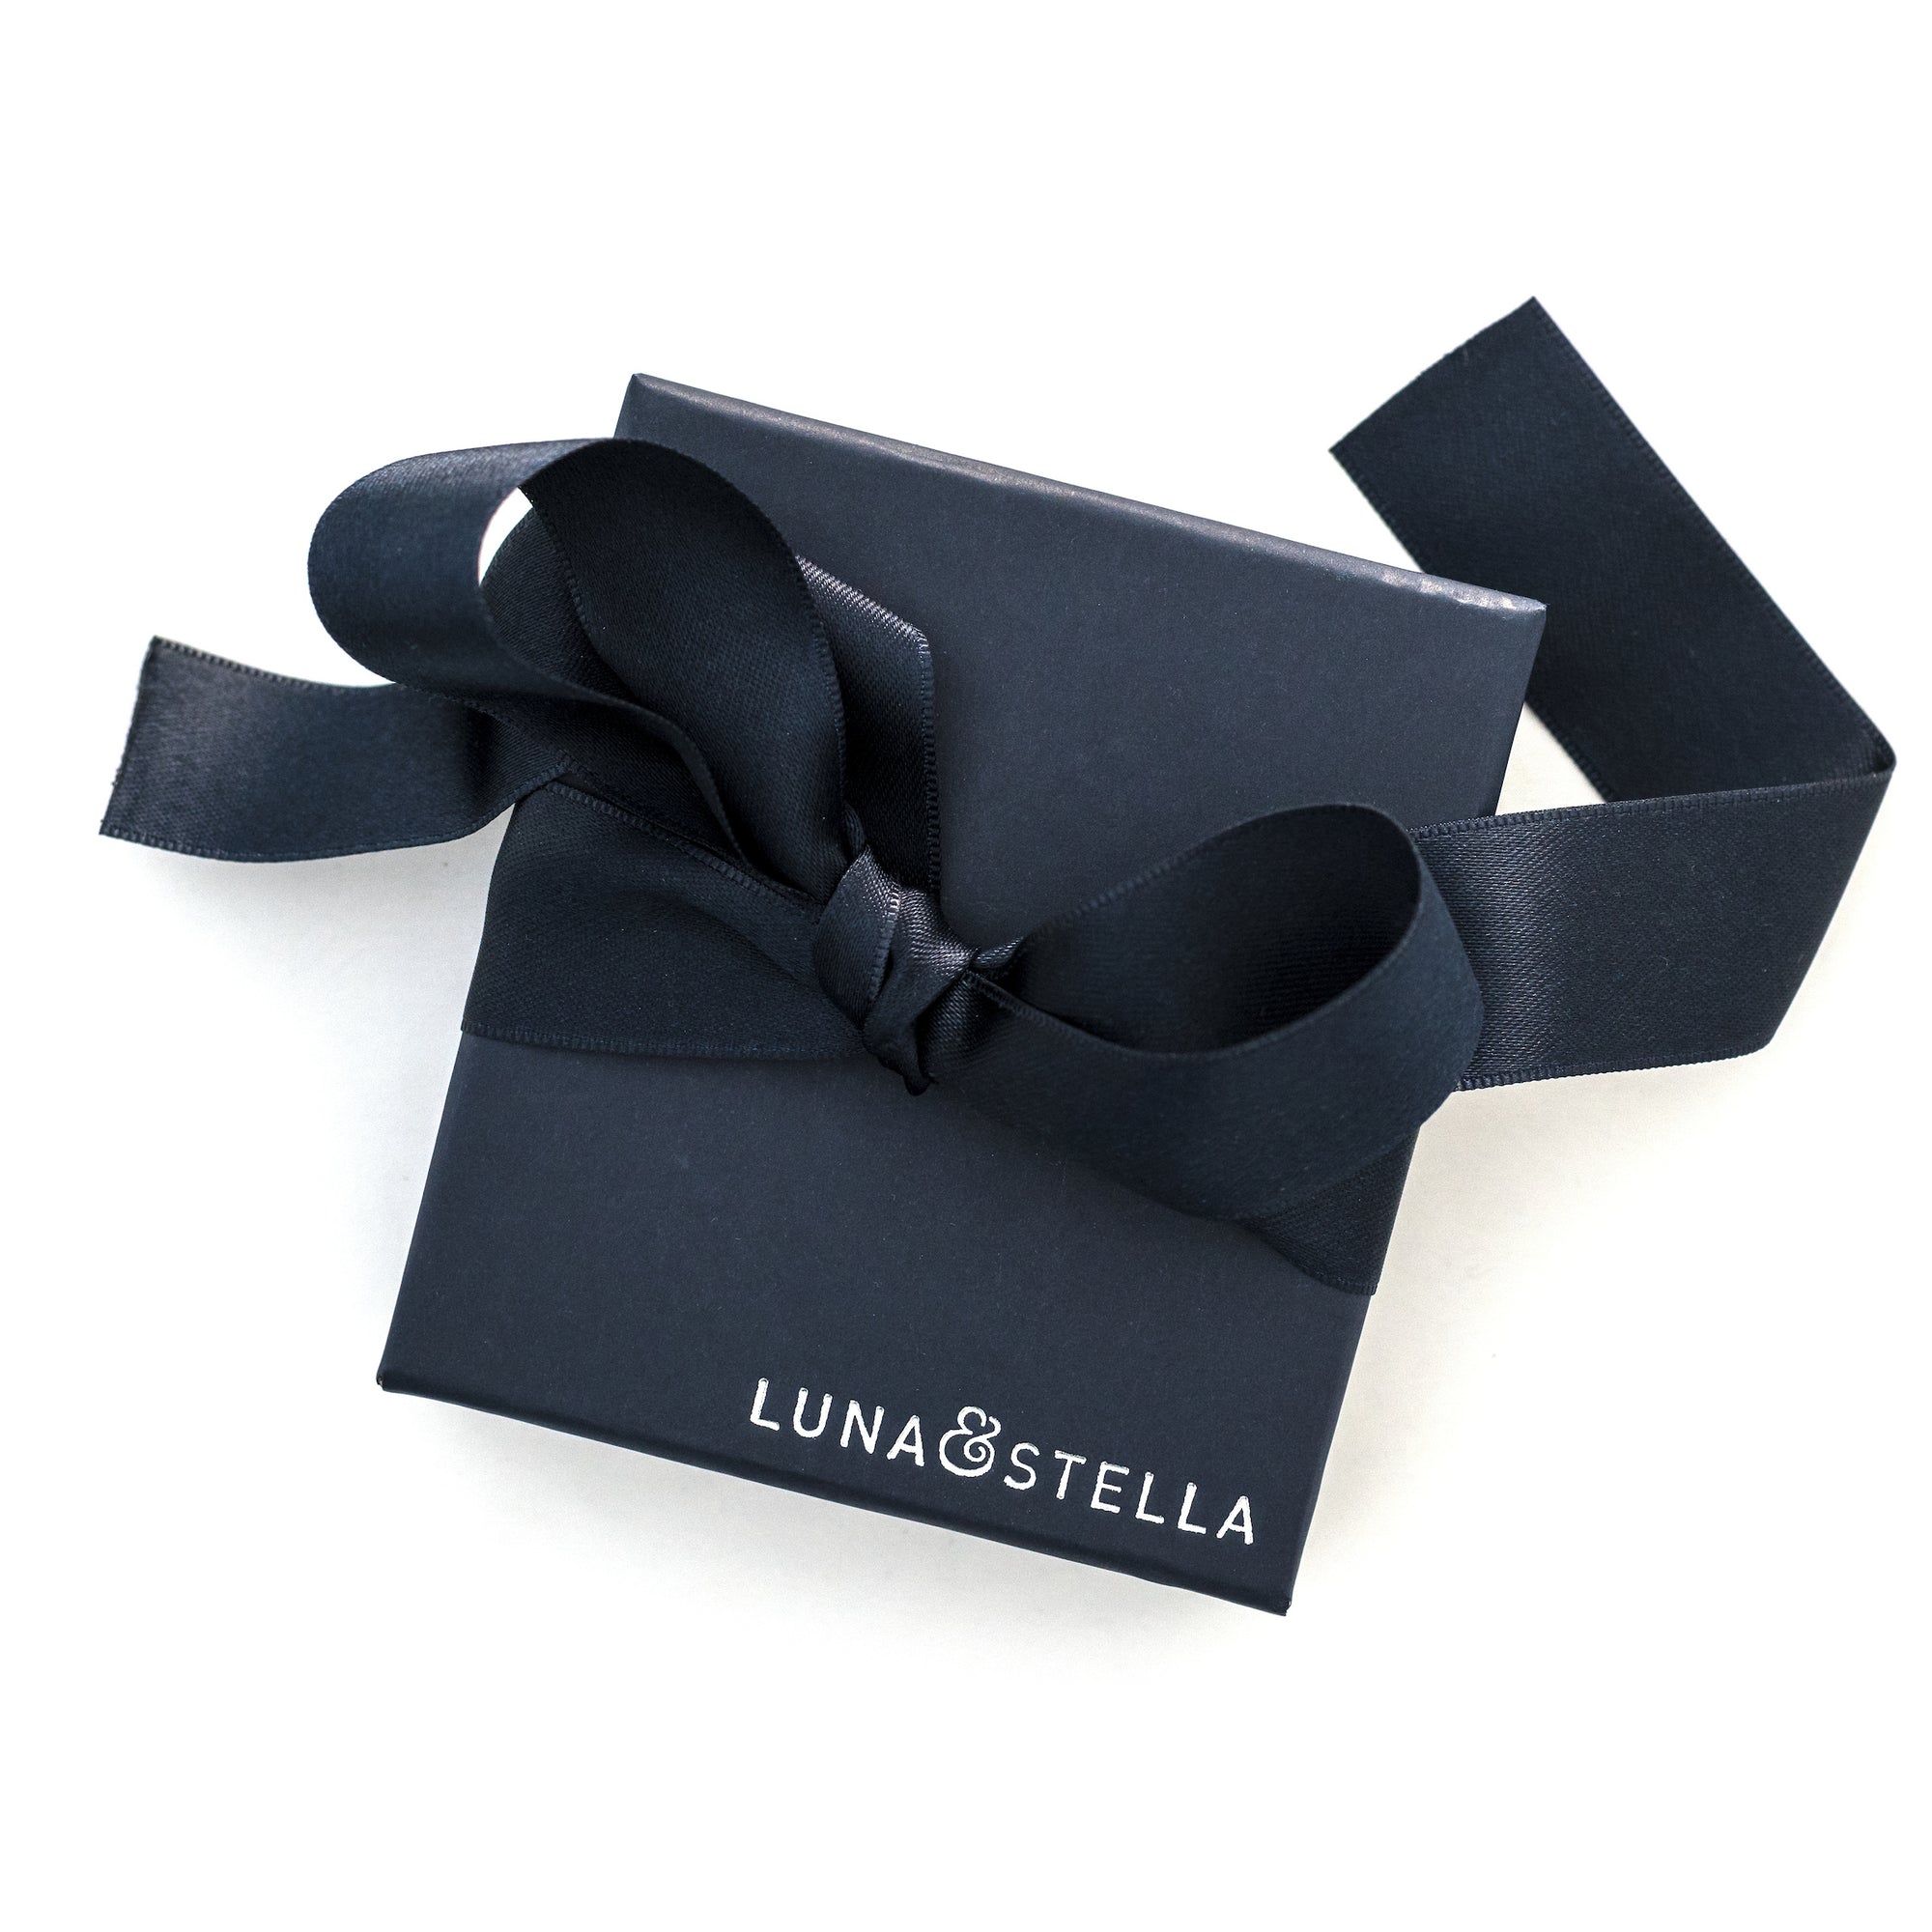 Luna & Stella Gift Box